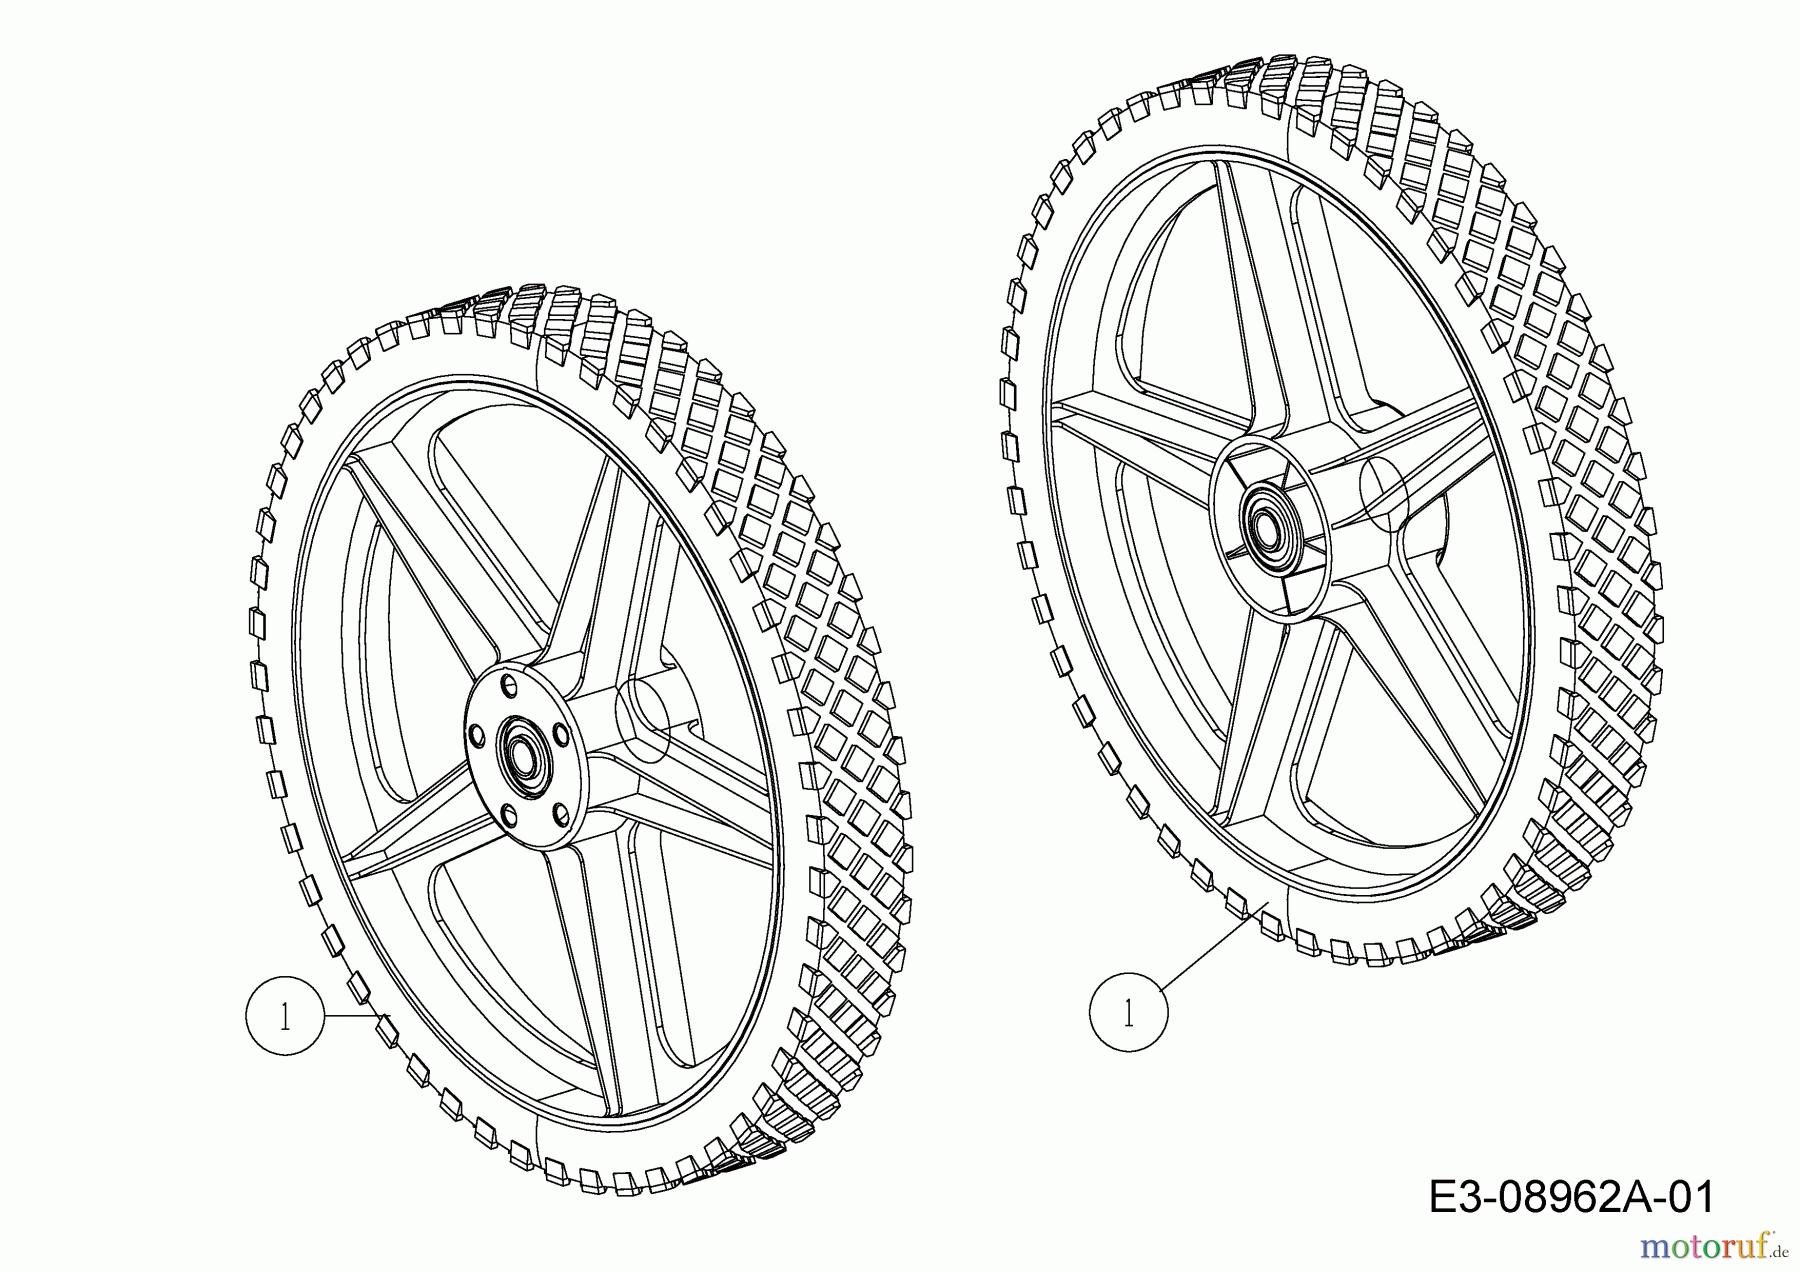  MTD Kantenschneider Wheeled String Trimmer 25A-26J7306  (2015) Räder